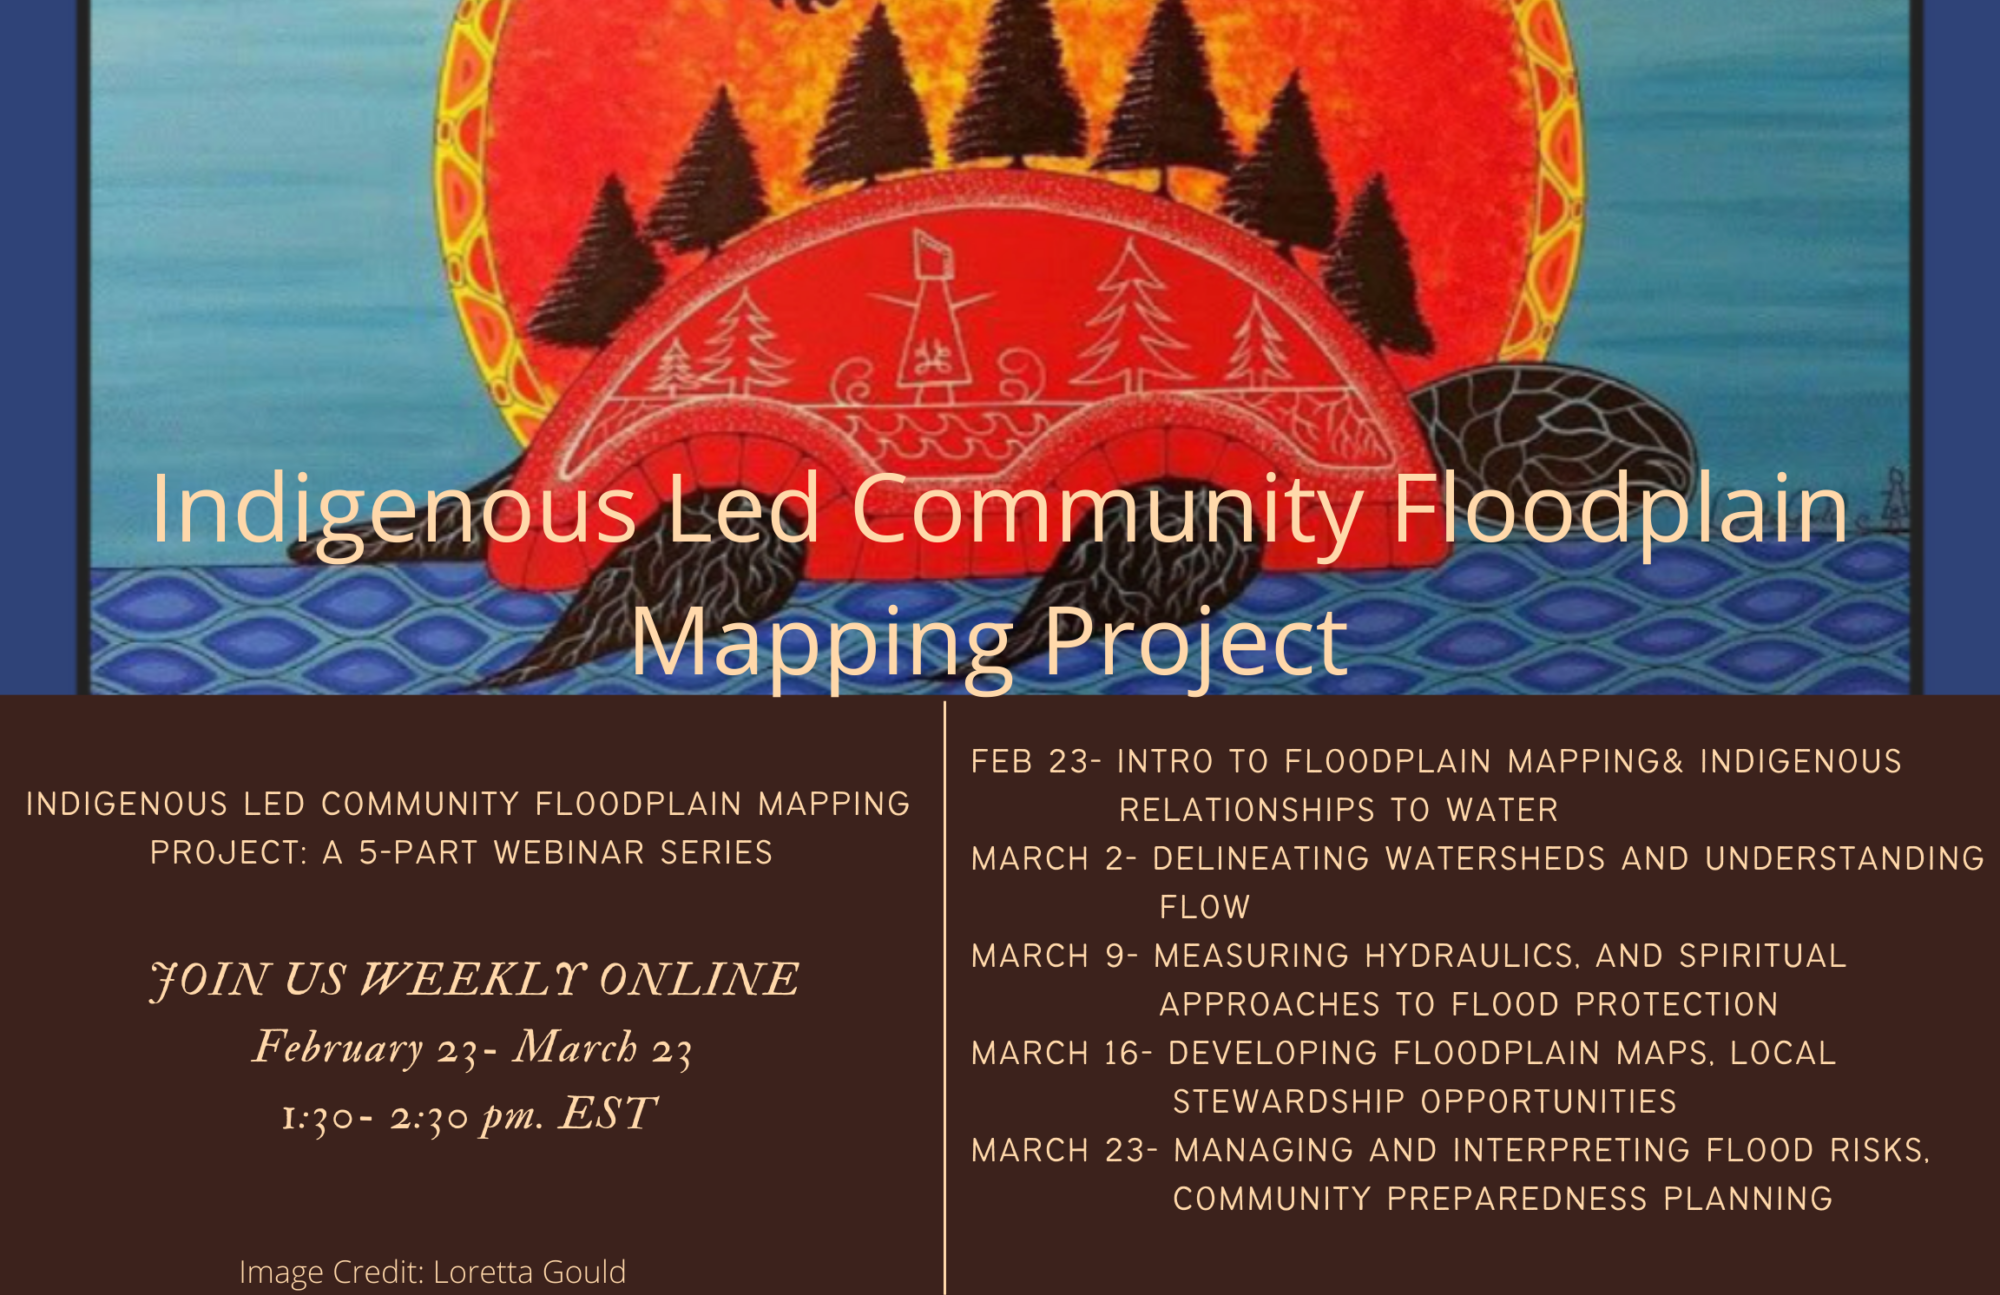 Indigenous led Community Floodplain Mapping 5-part webinar series